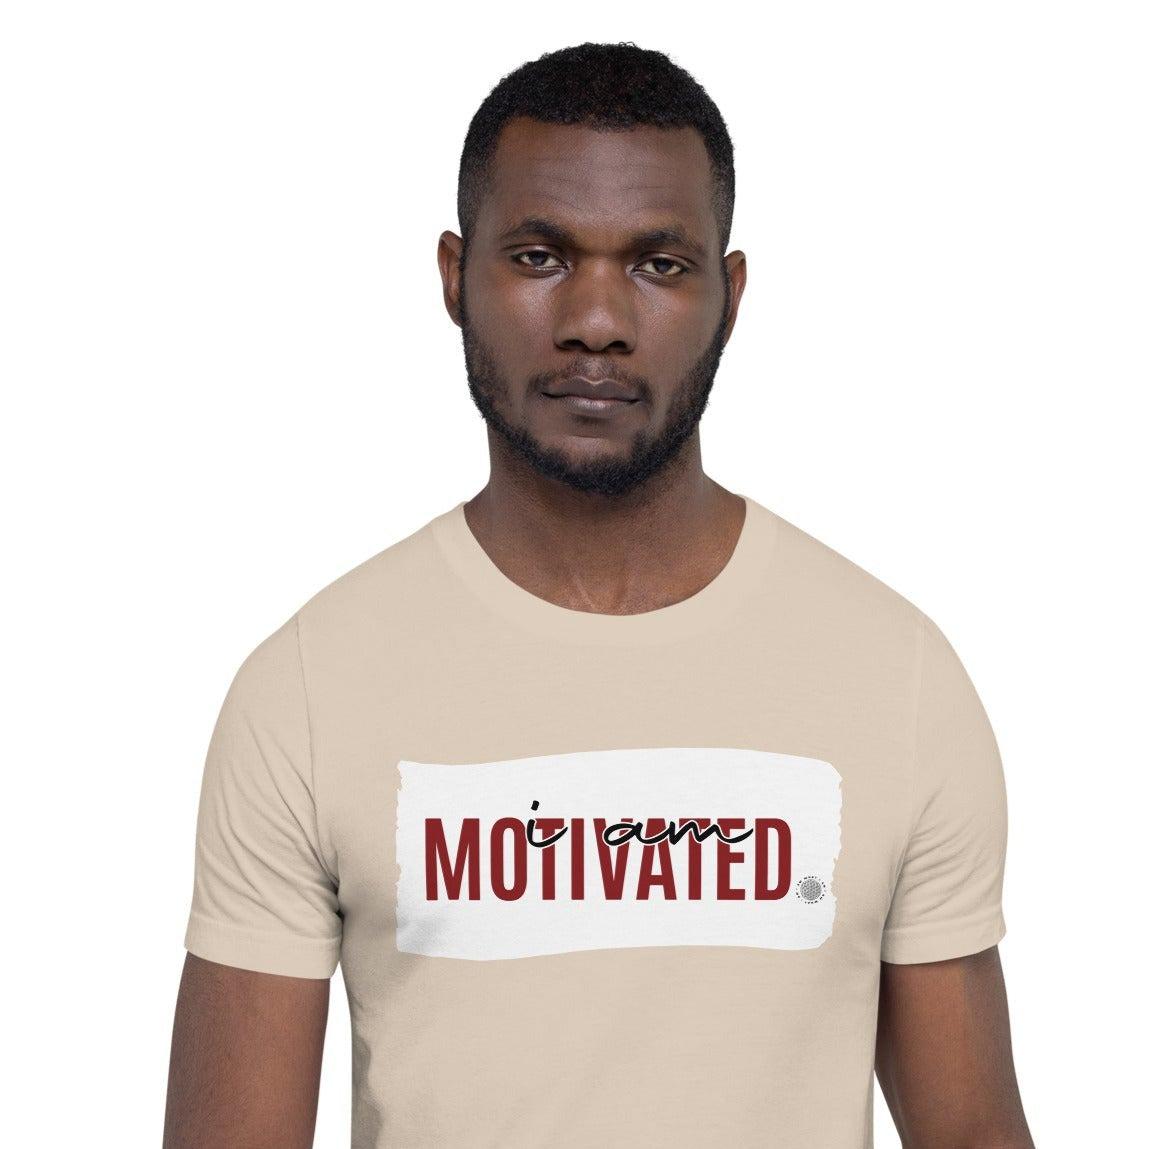 I Am Motivated Adult Unisex T-Shirt tan